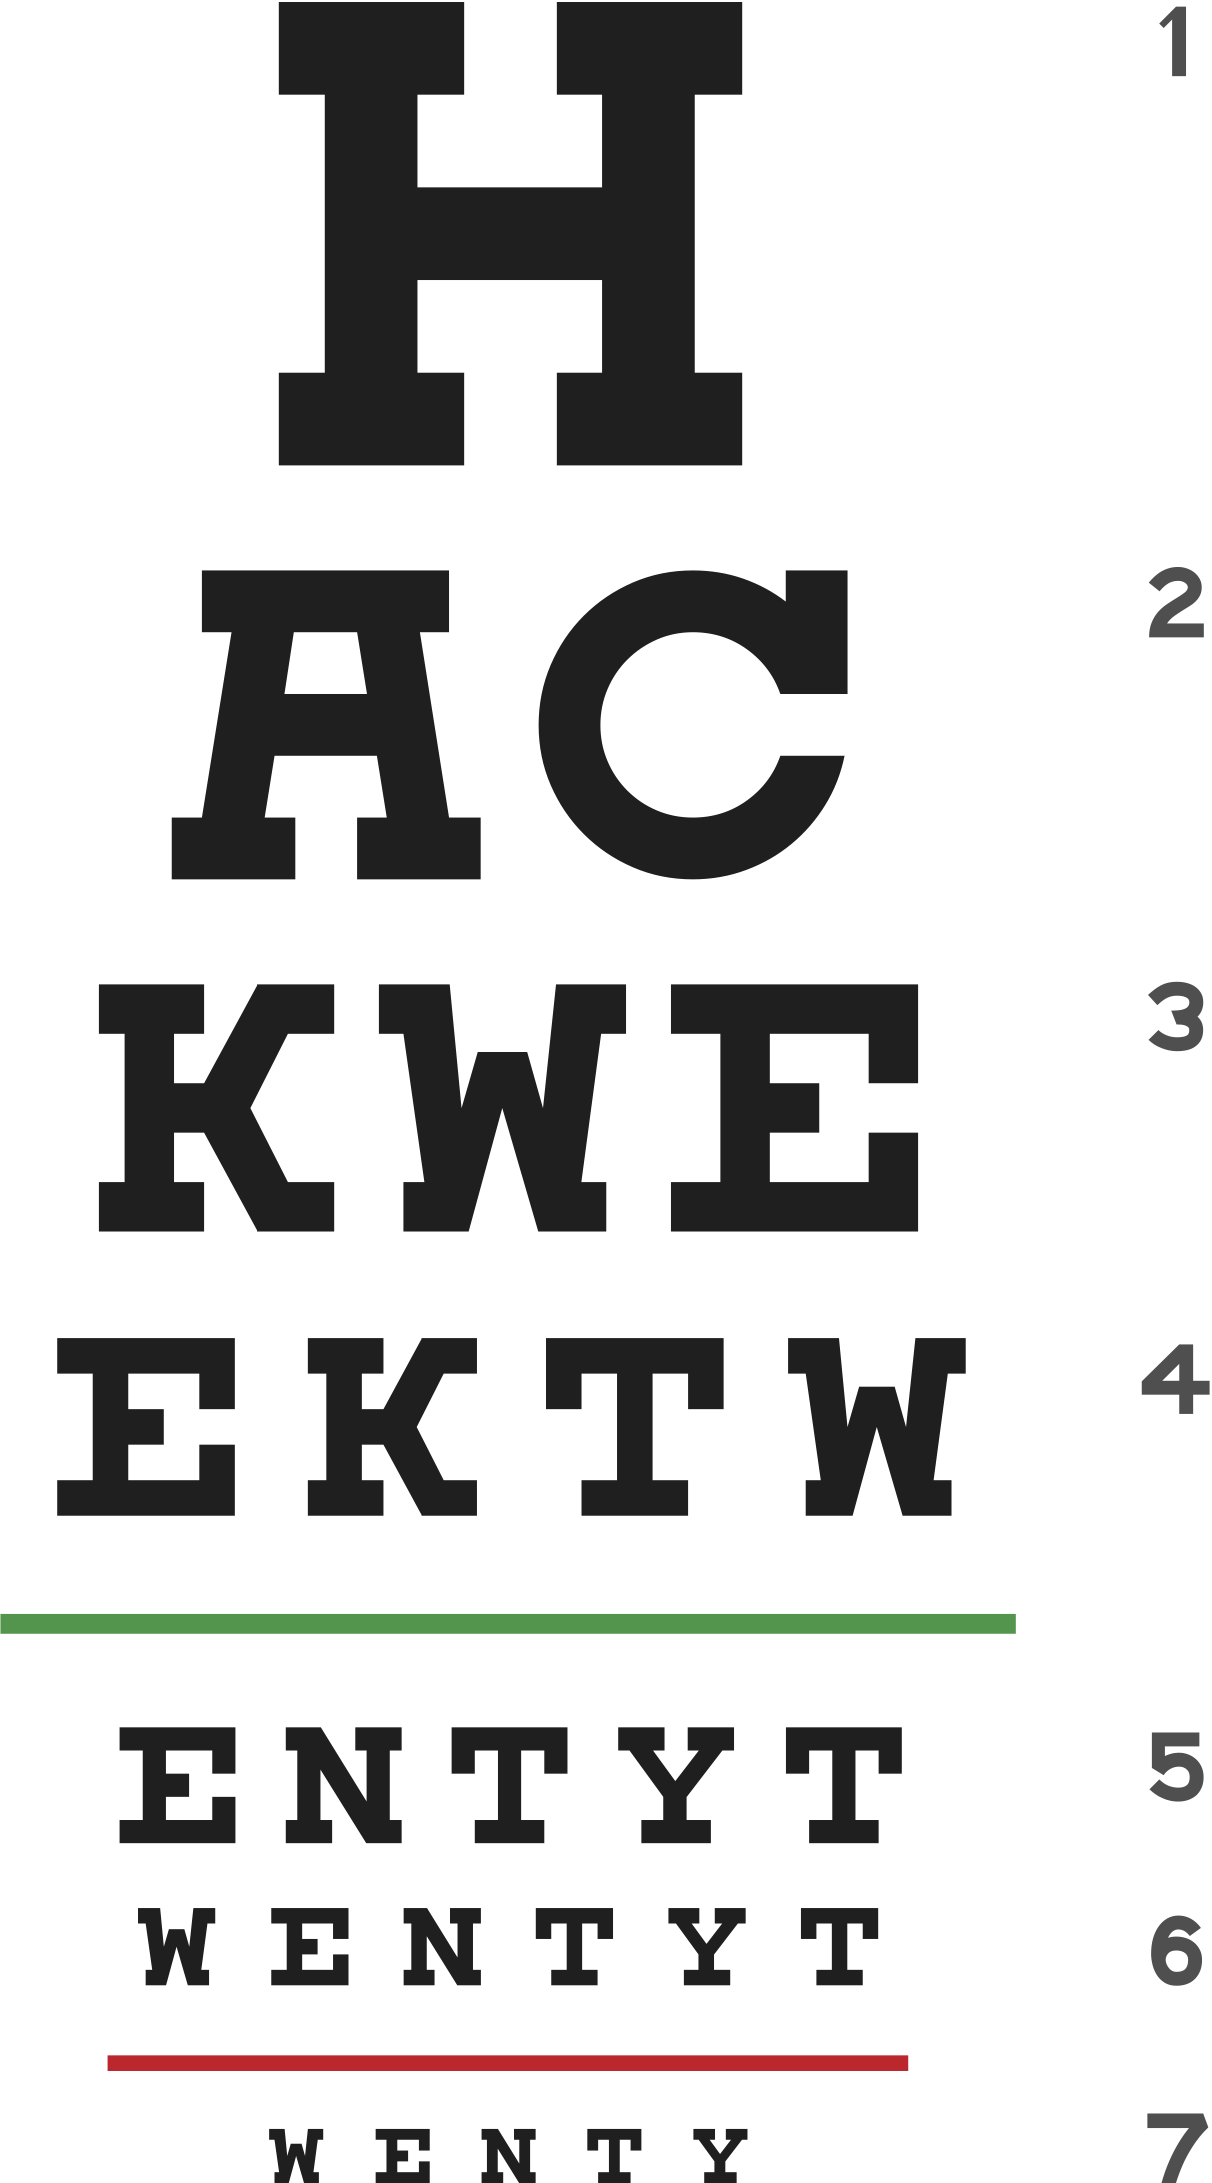 Hack Week 20 t-shirt logo designed by Zillow employee Scott Smith. It looks like an eye exam poster